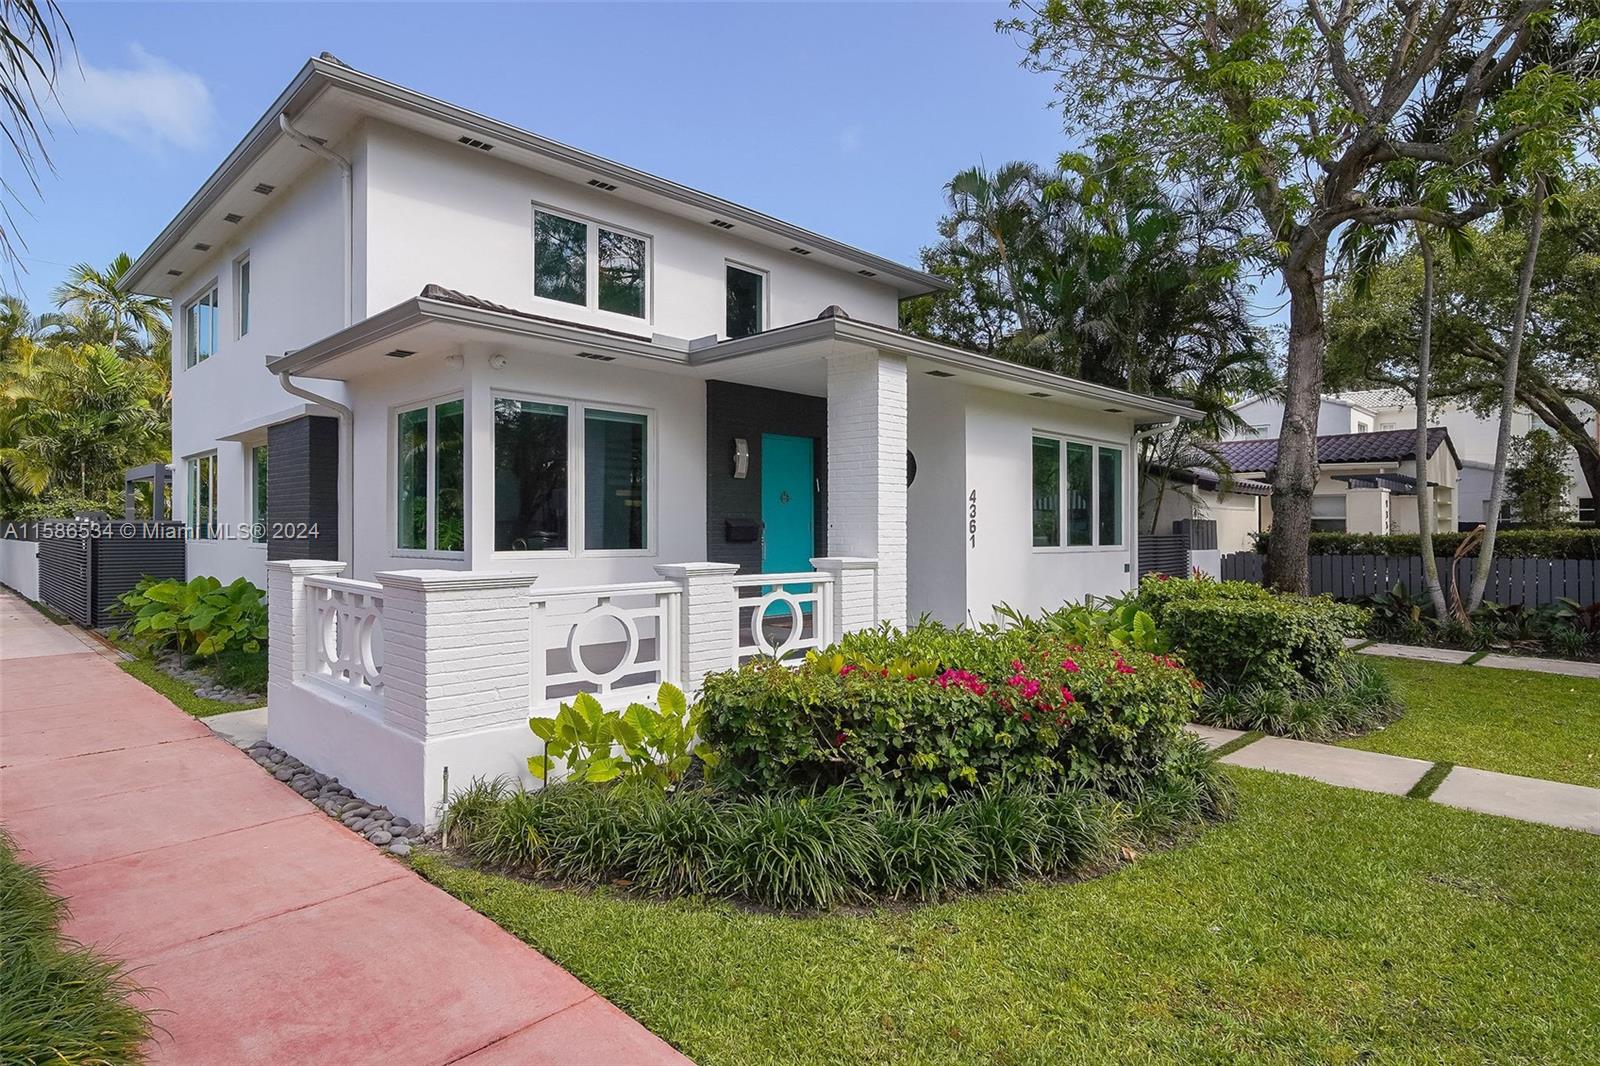 Rental Property at 4361 Royal Palm Ave, Miami Beach, Miami-Dade County, Florida - Bedrooms: 5 
Bathrooms: 4  - $18,000 MO.